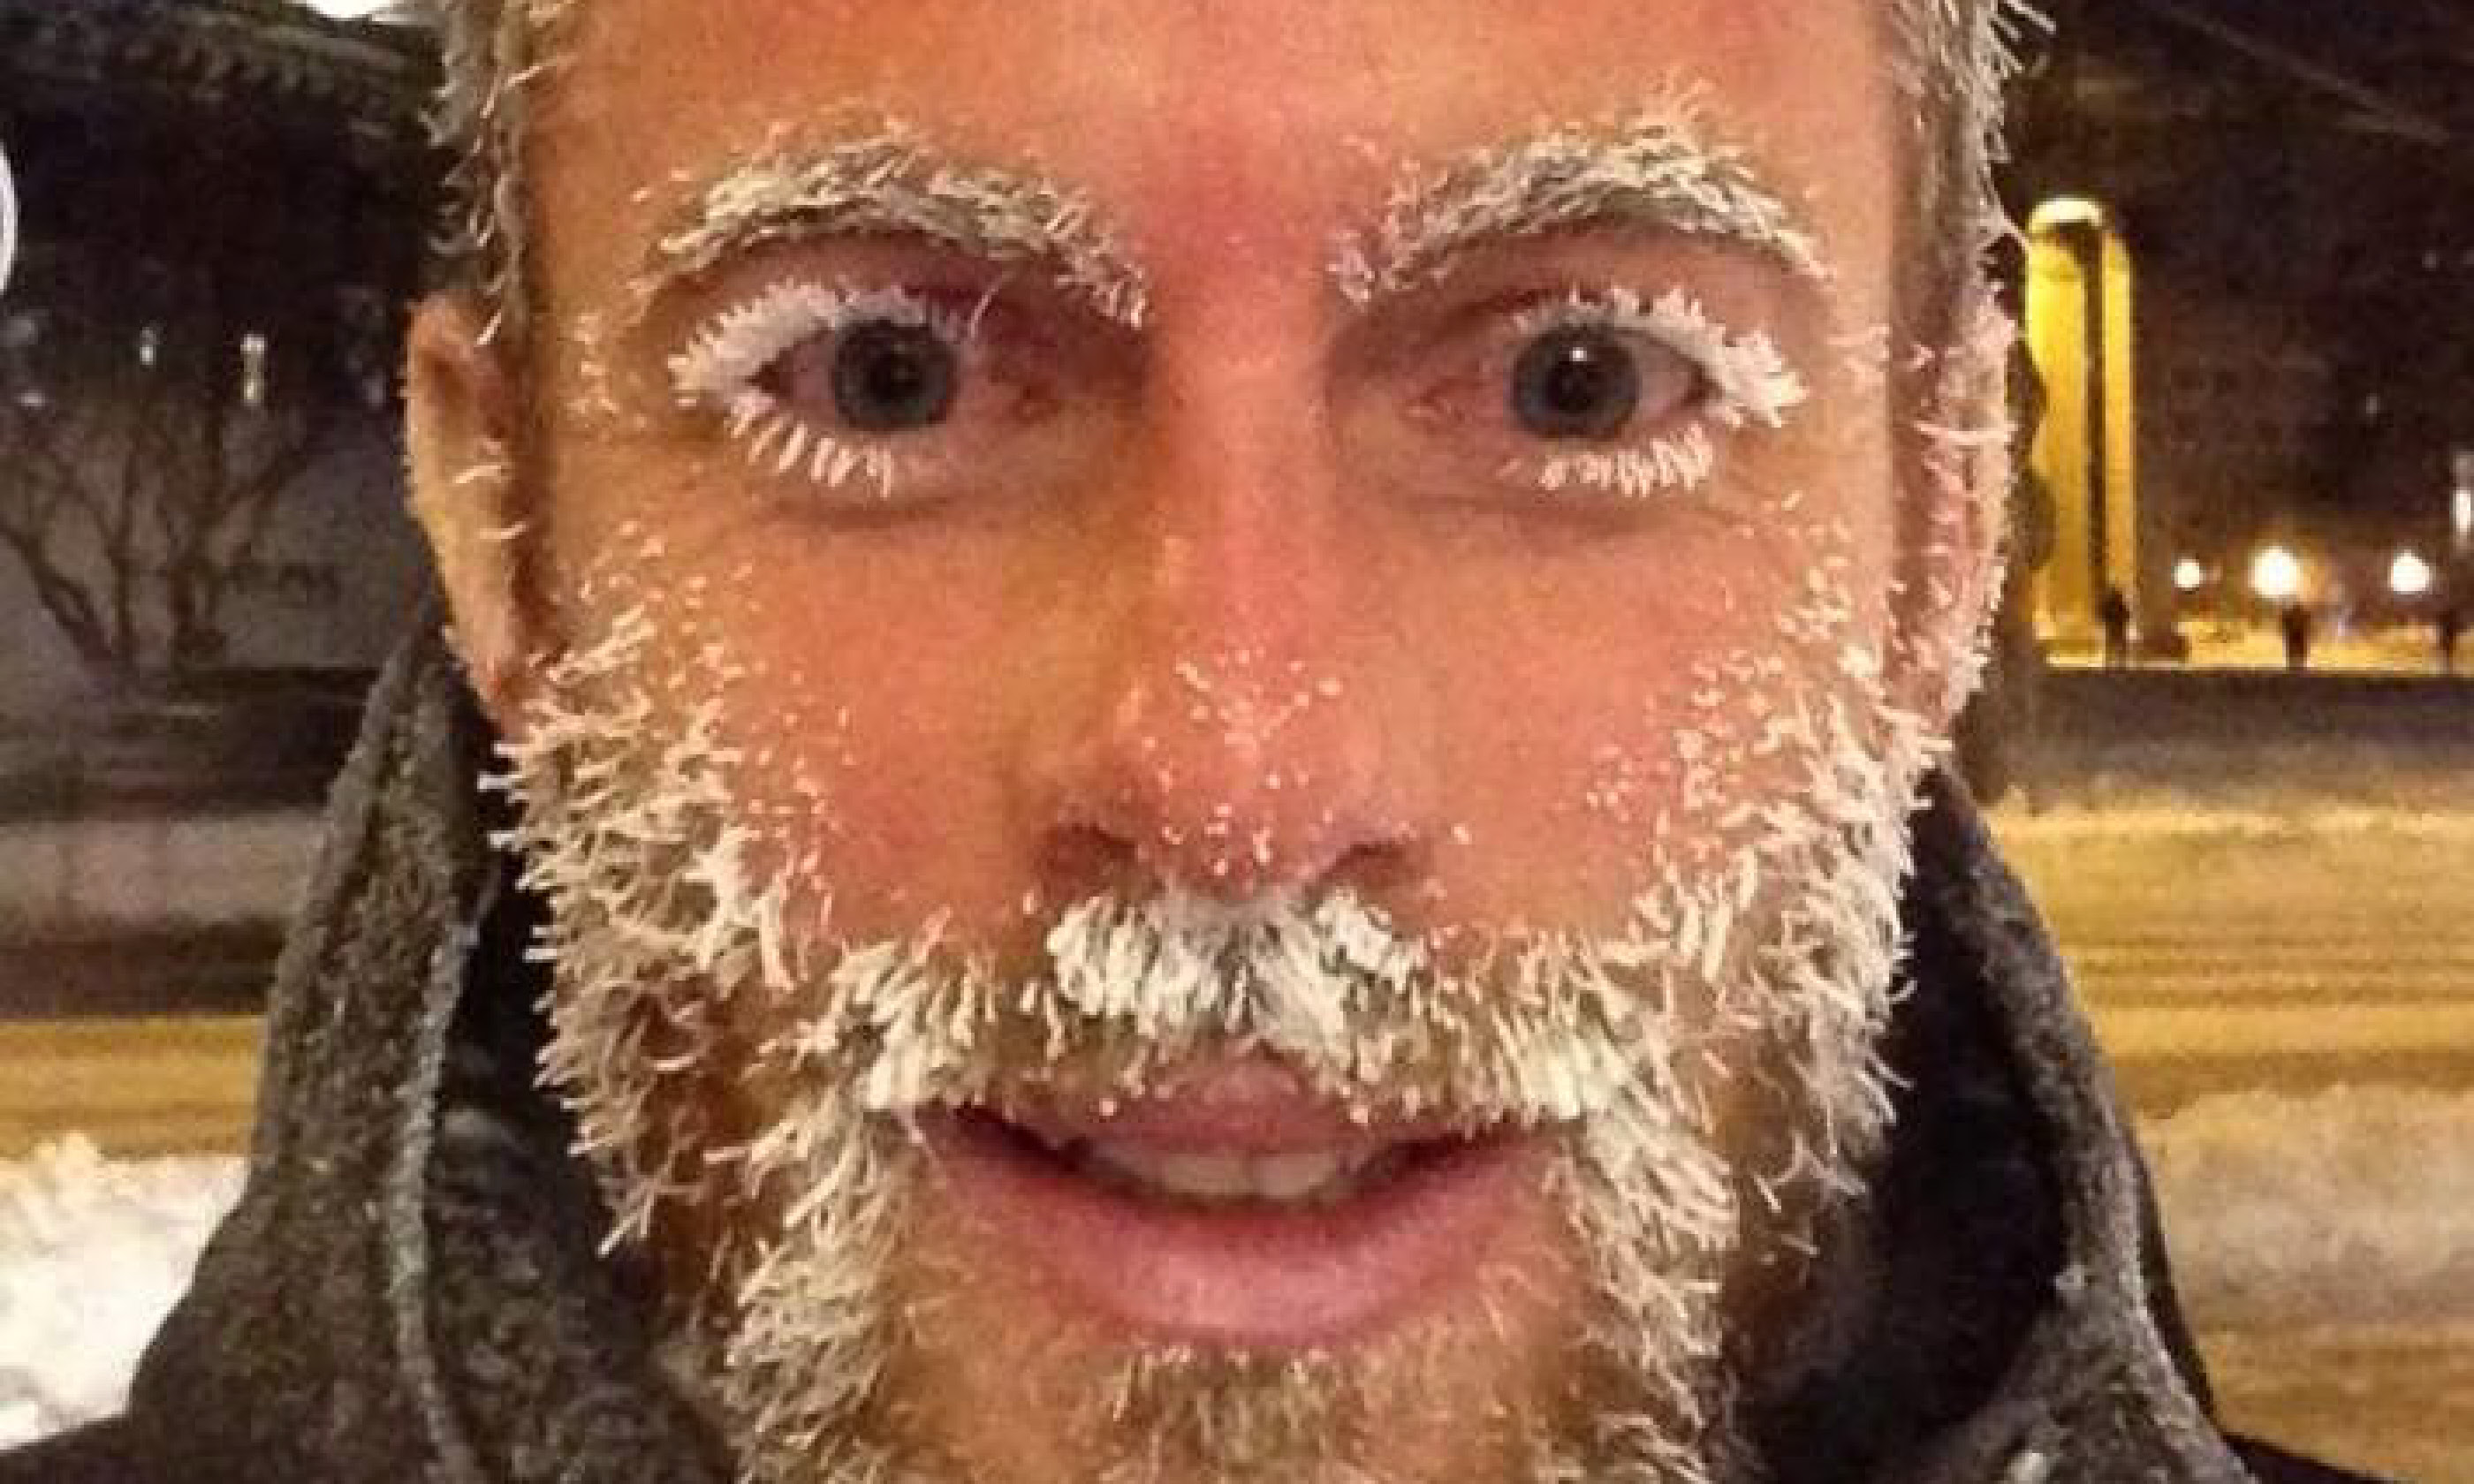 The obligatory 'frost face' selfie